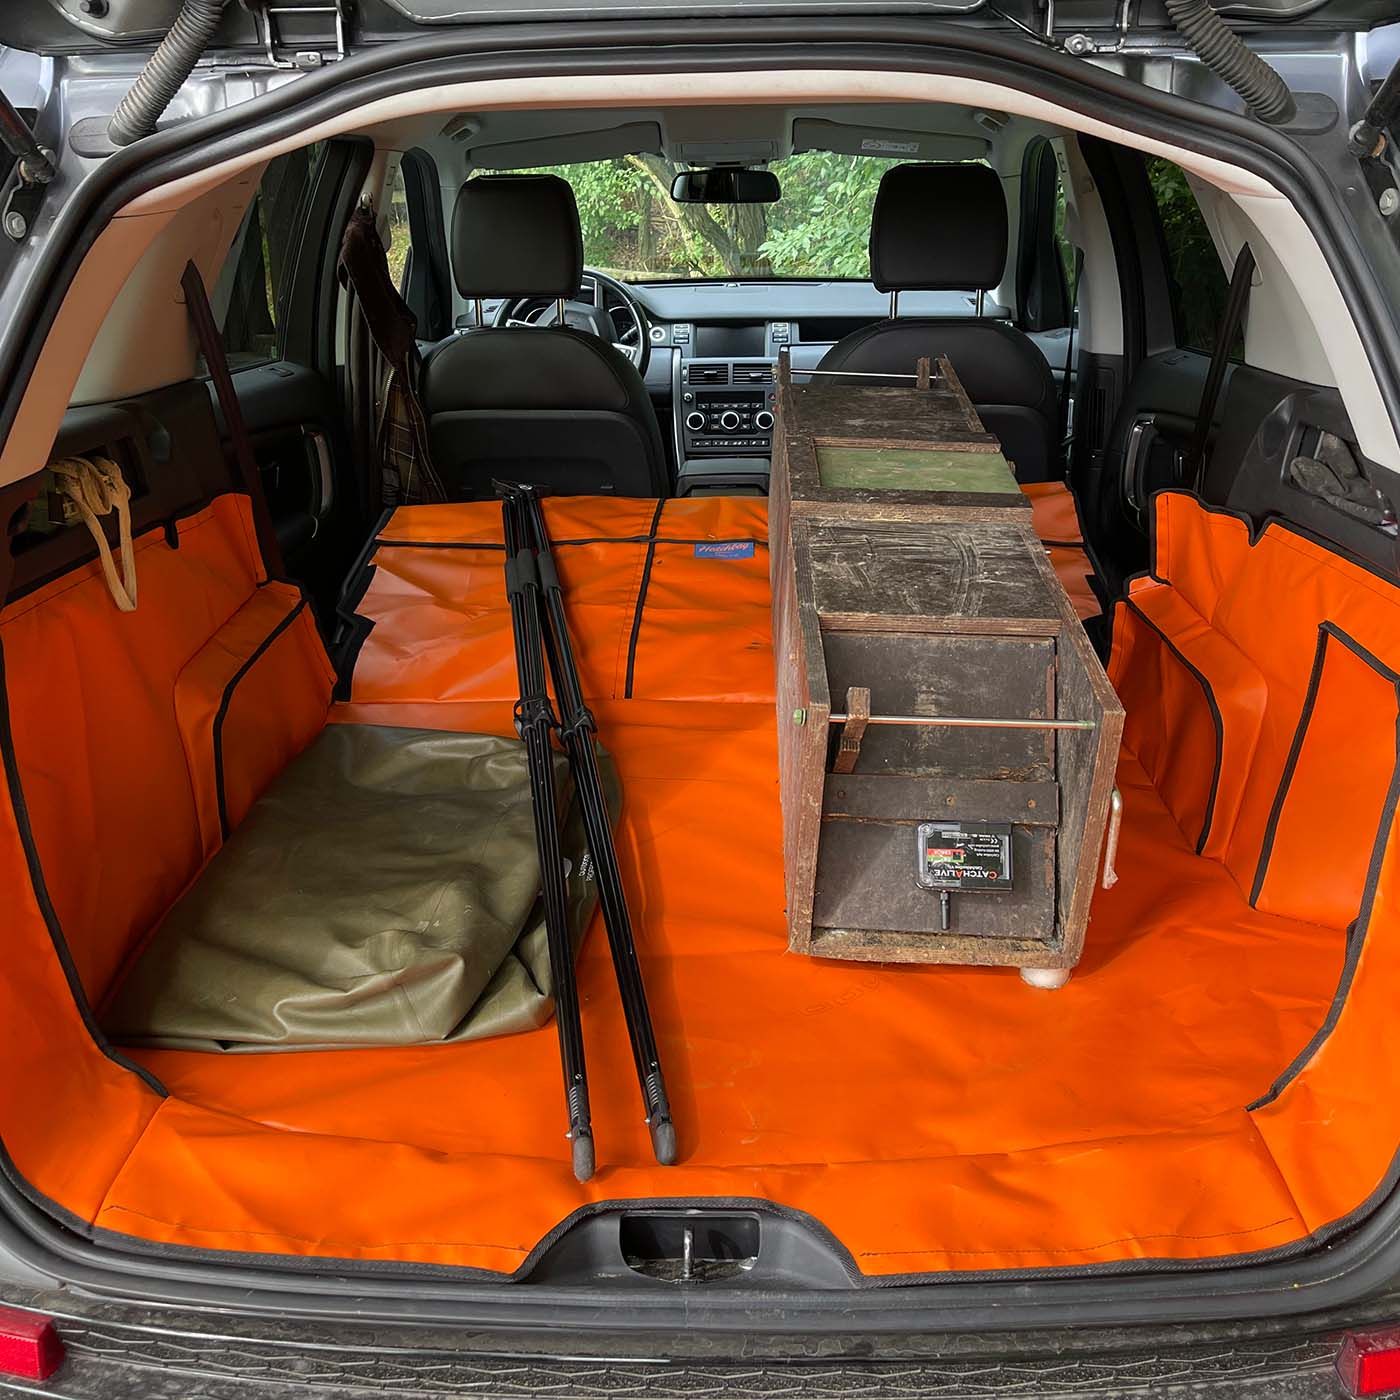 Zacky Kofferraumschutz: Passgenaue Folie hält Auto-Kofferraum sauber